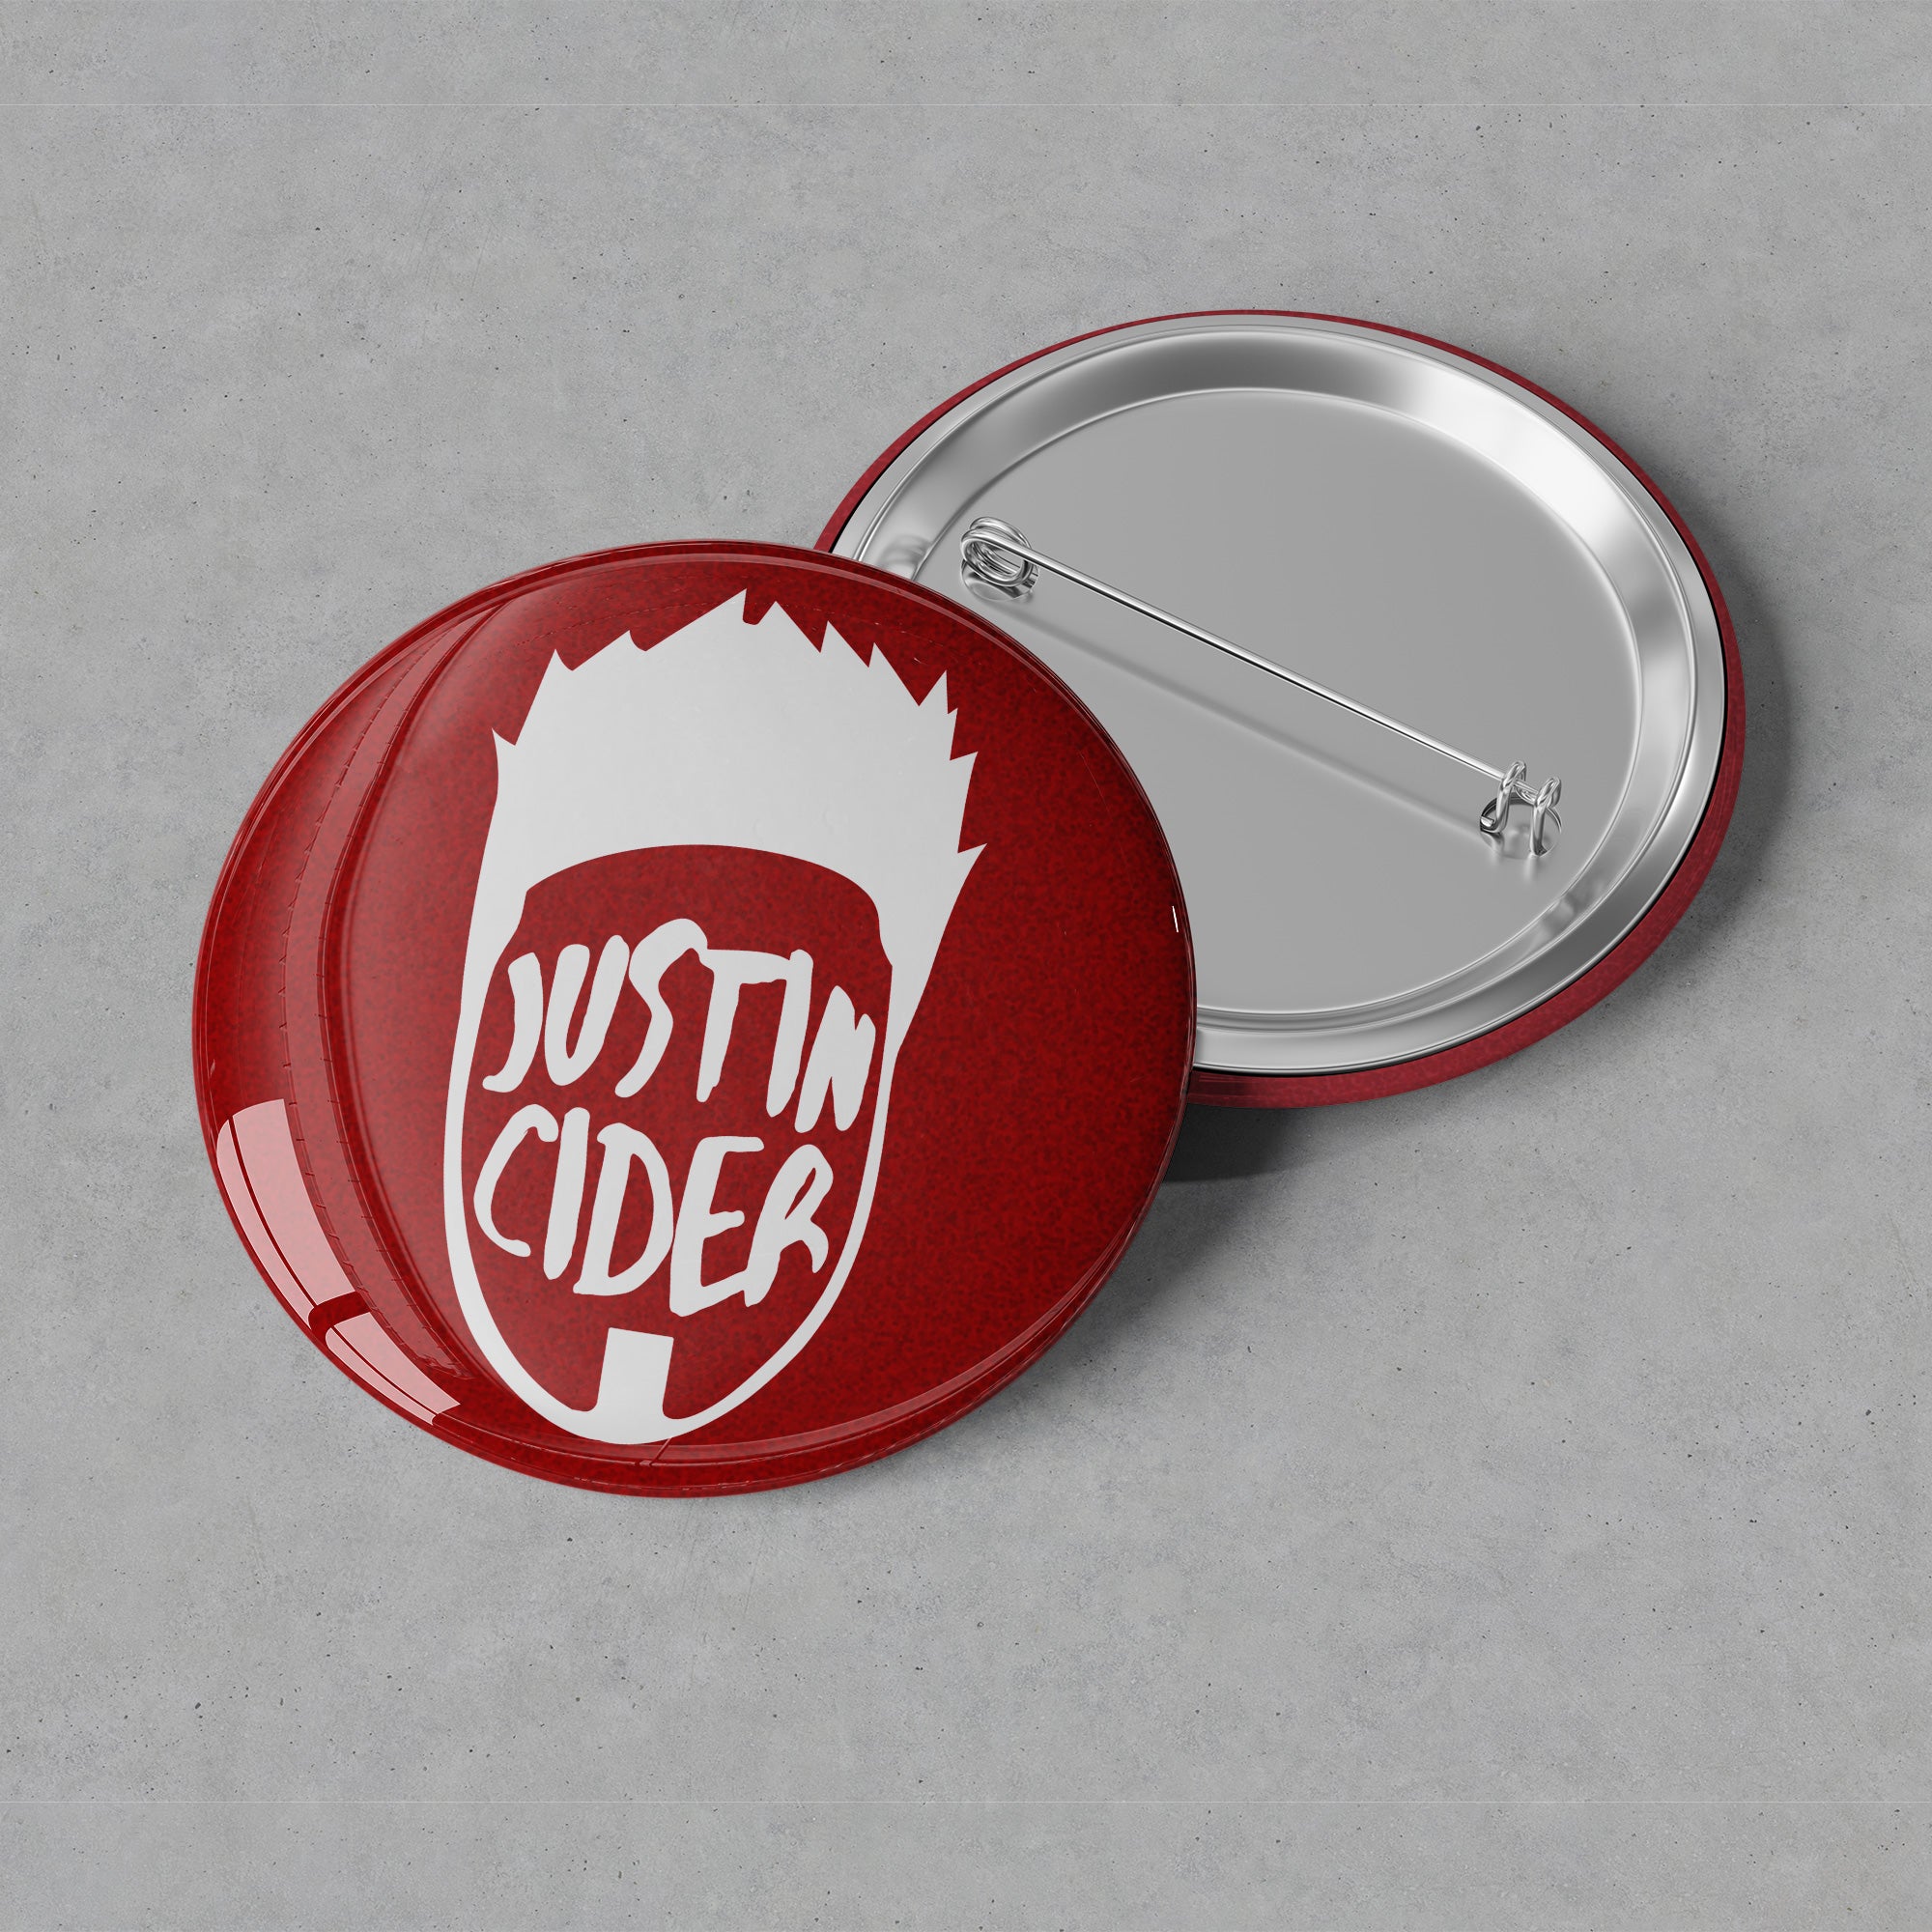 Justin Cider - Logo Button